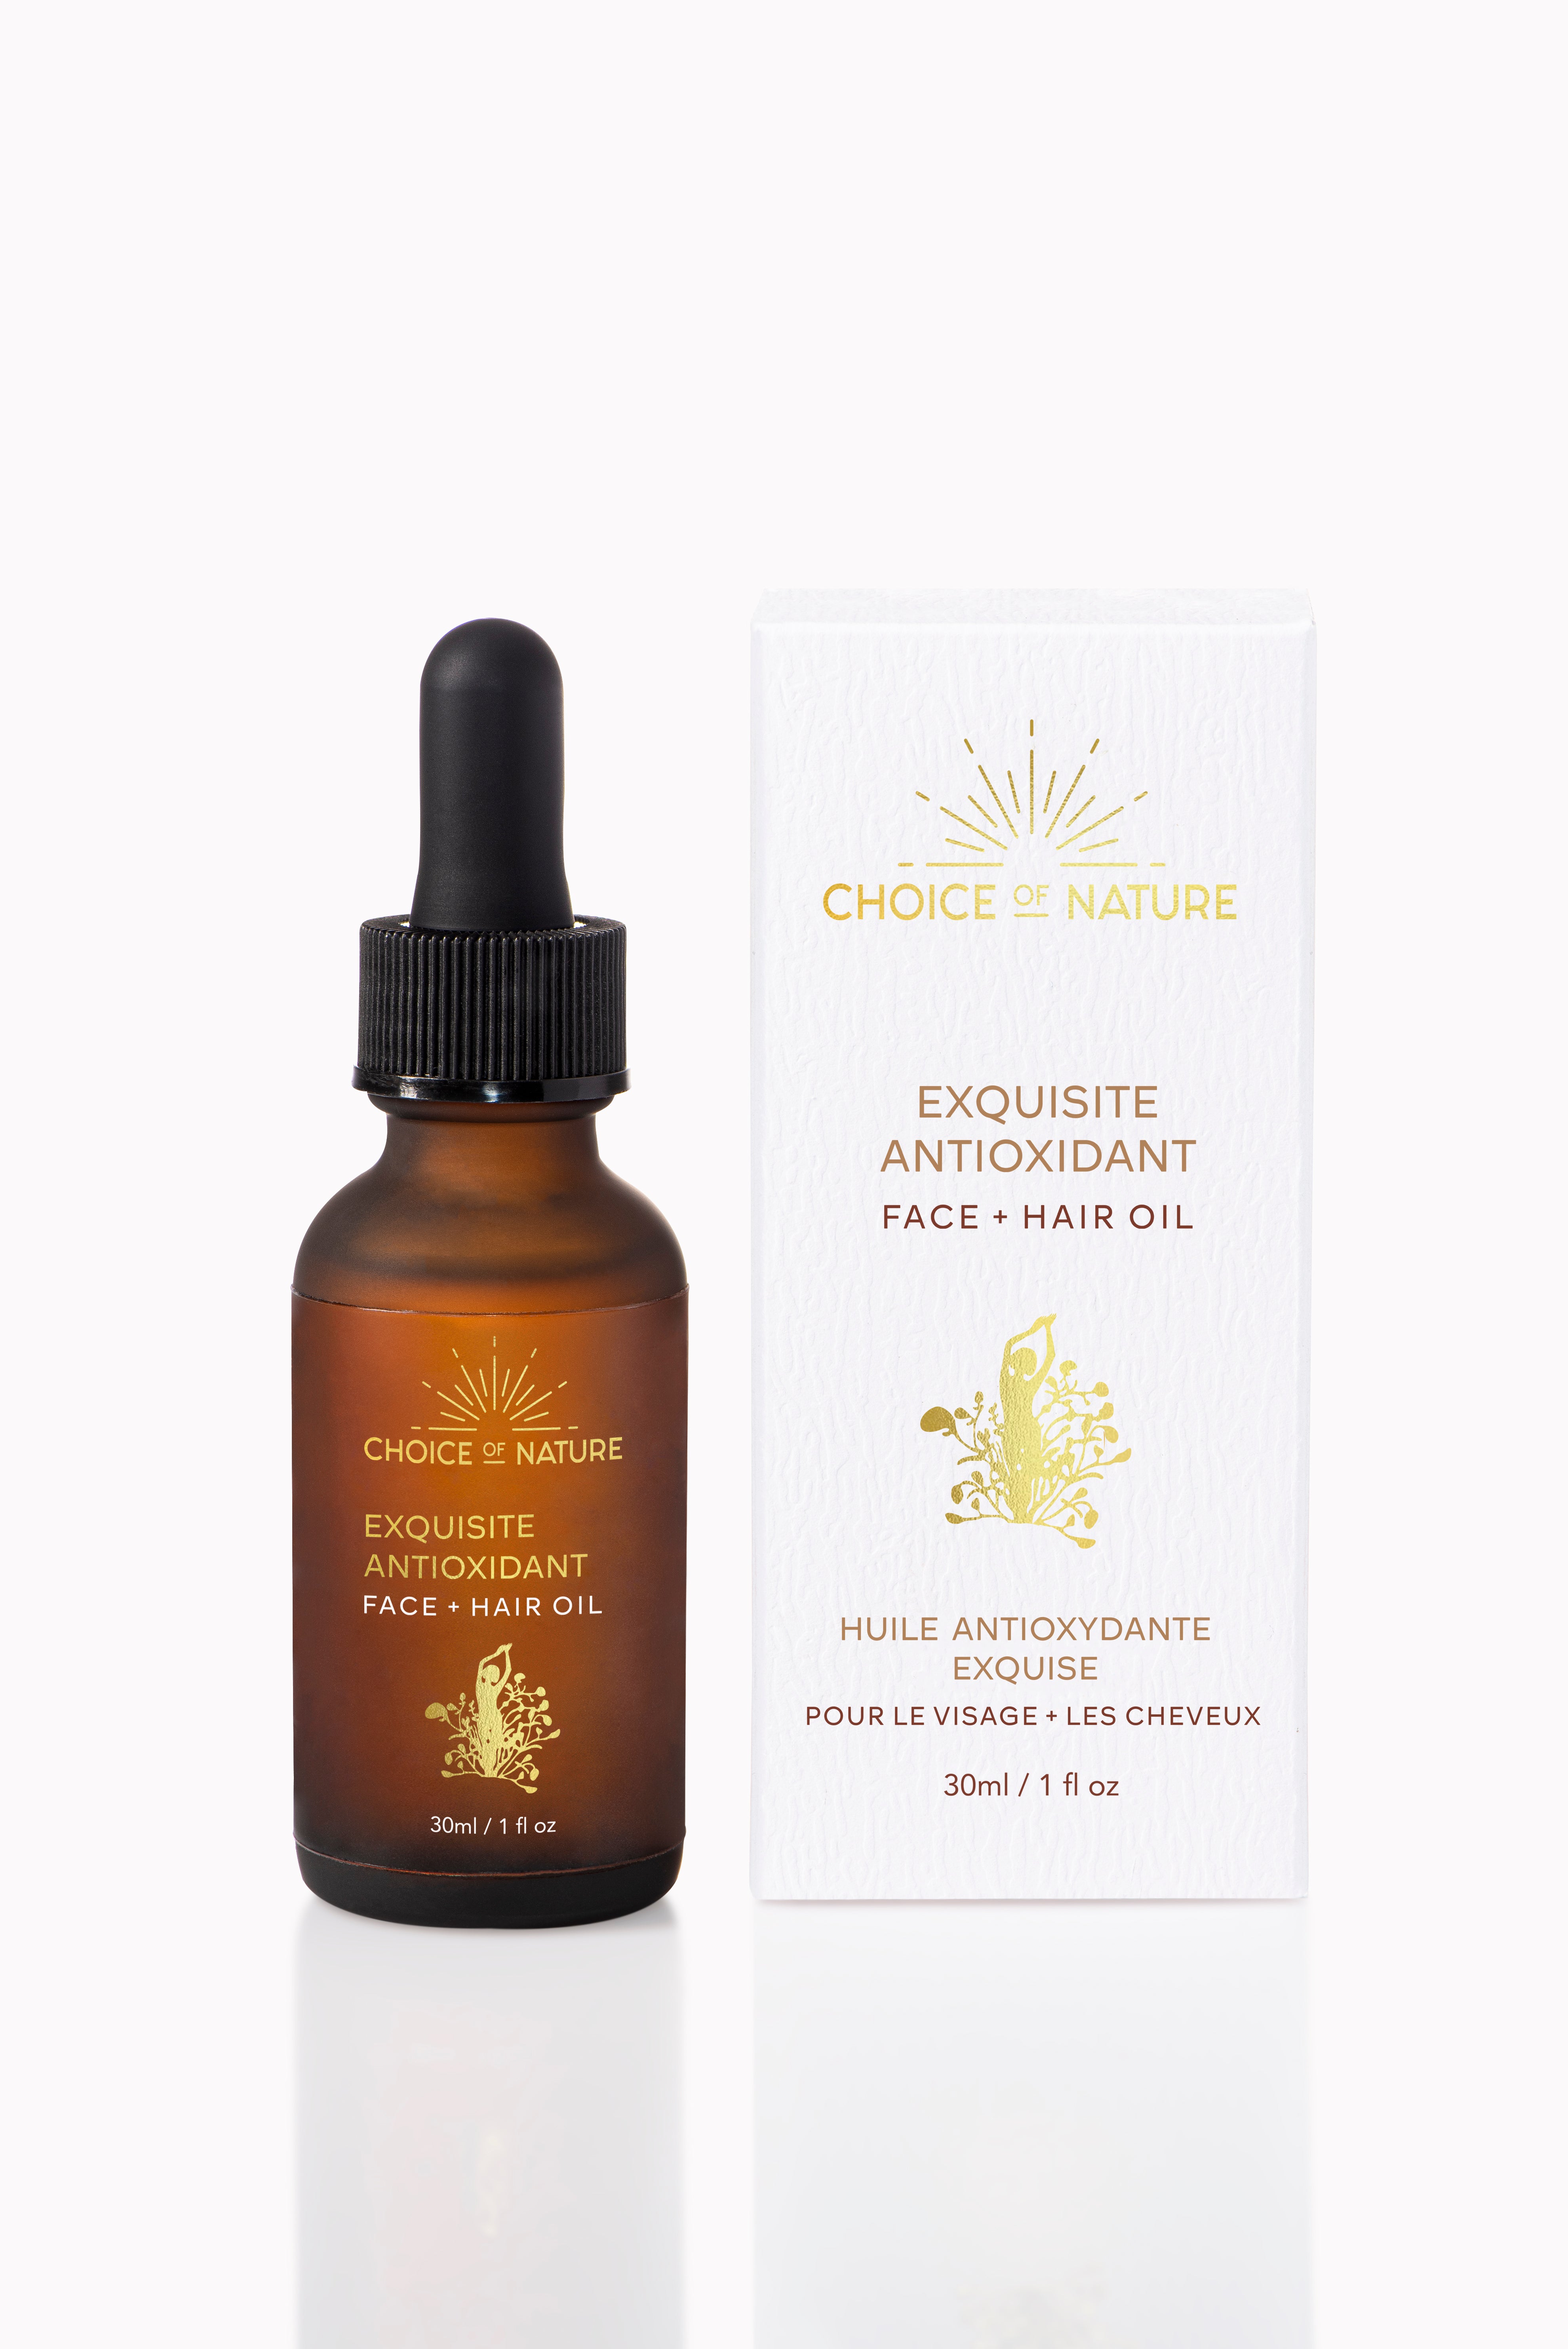 Exquisite Antioxidant Face & Hair Oil.